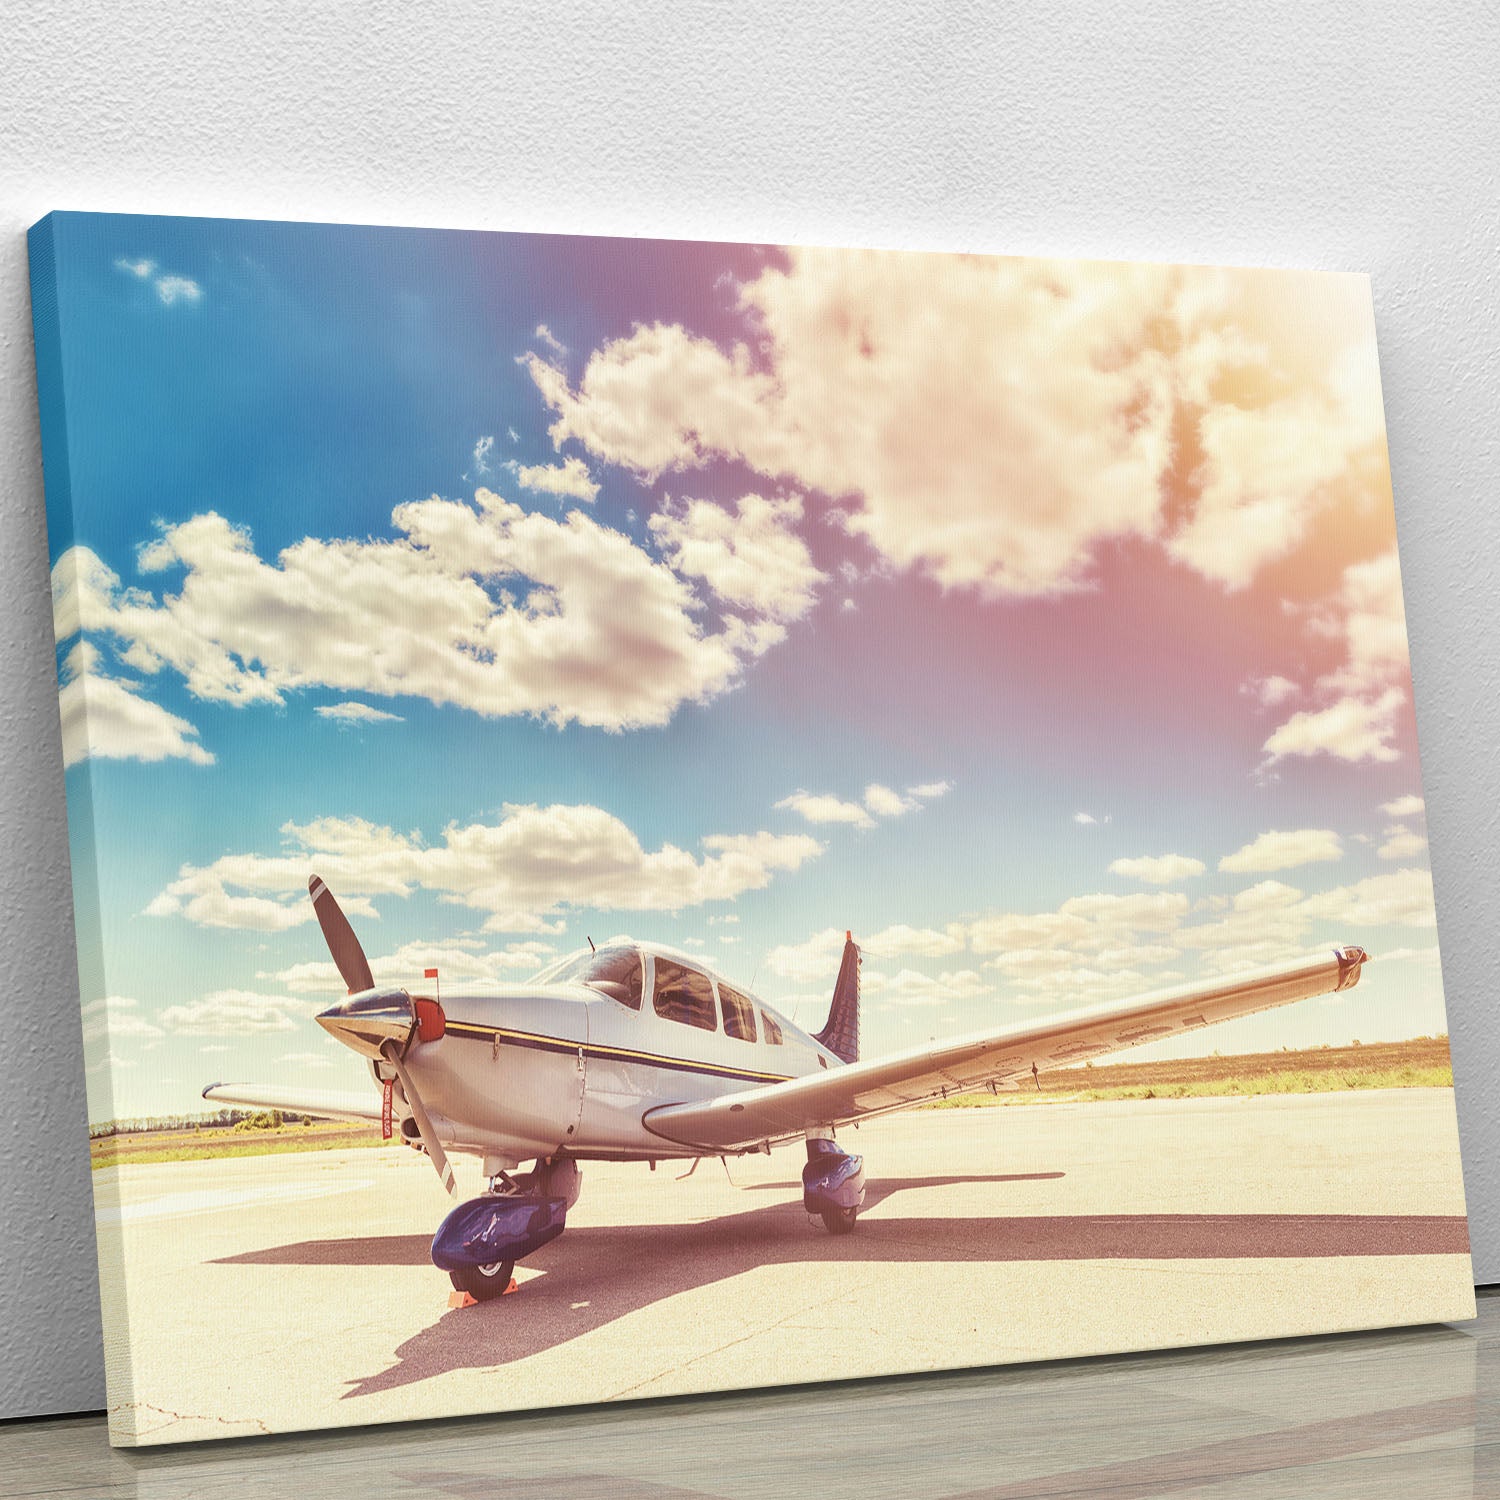 Propeller plane parked Canvas Print or Poster - Canvas Art Rocks - 1